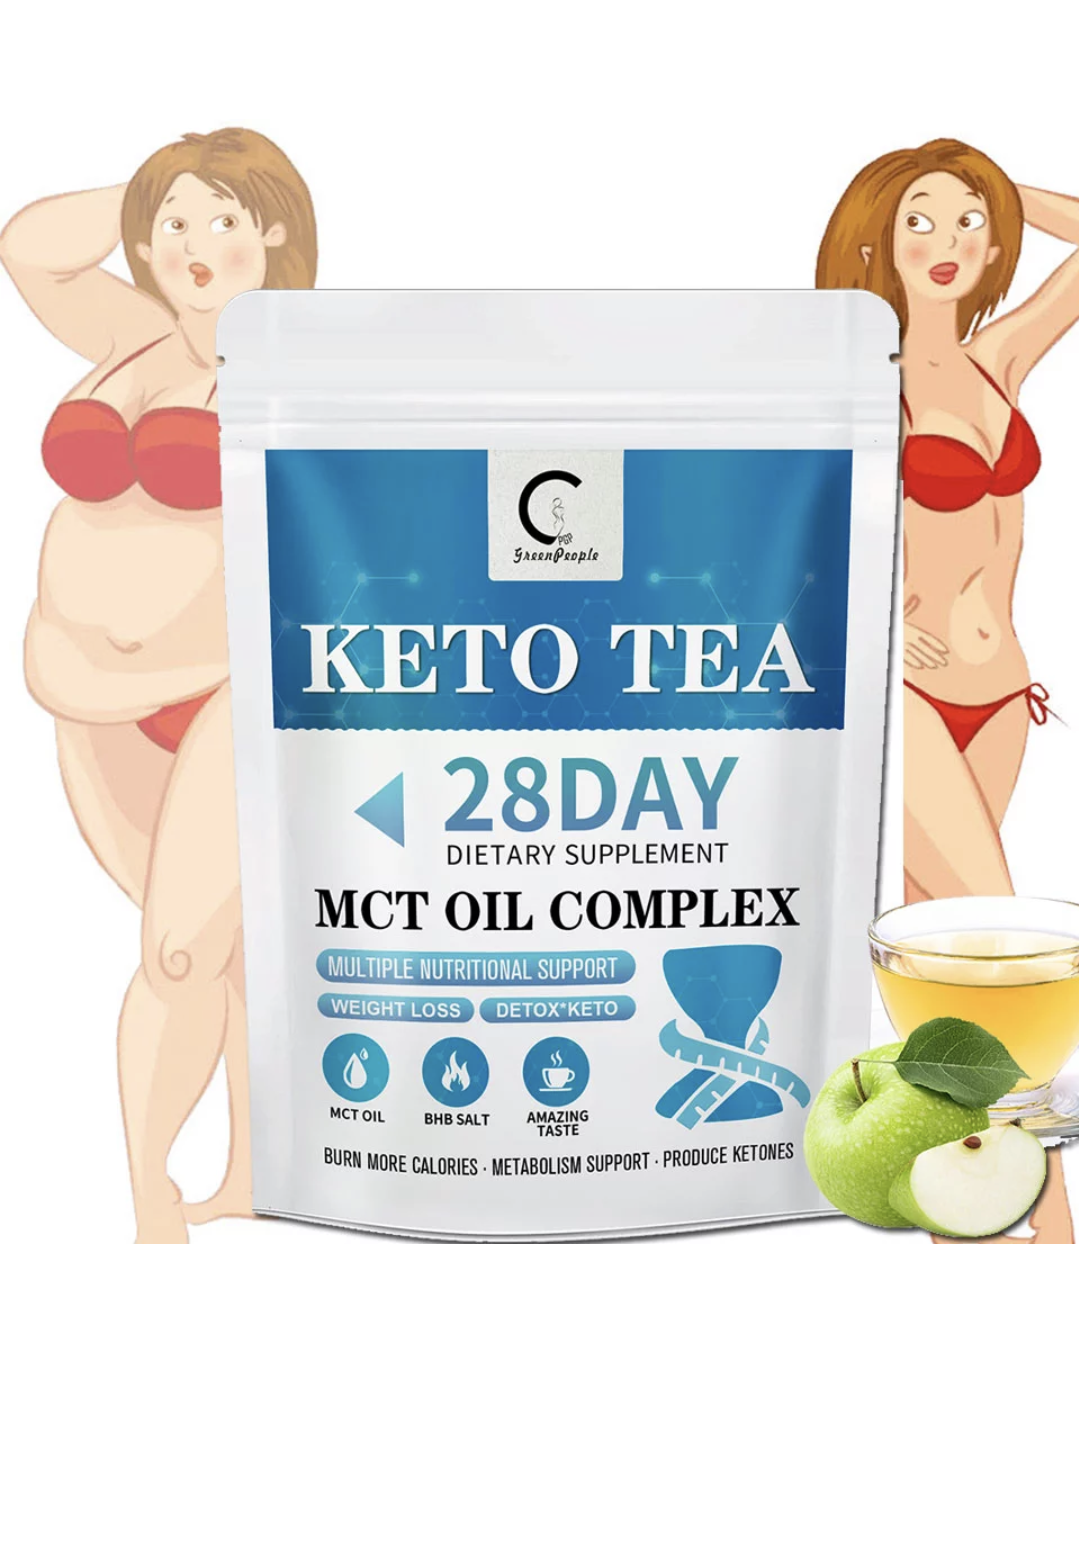 KETO Tea 28 Day Supplement